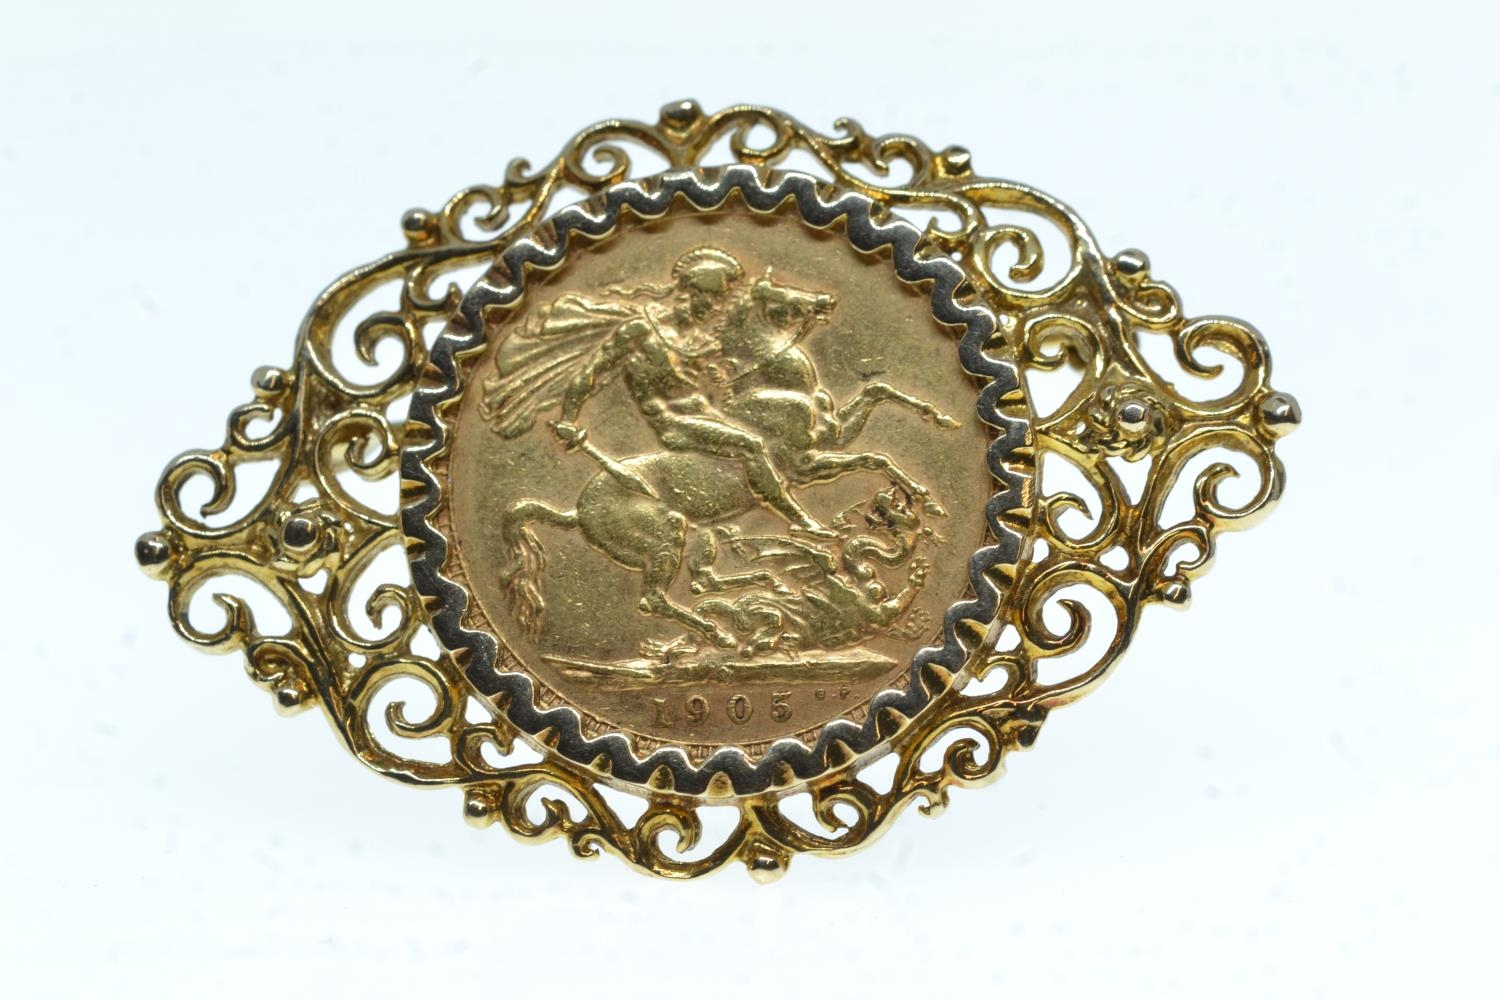 1905 Edward VII Sydney mint full sovereign in 9ct gold brooch mount, brooch width 47mm, gross weight